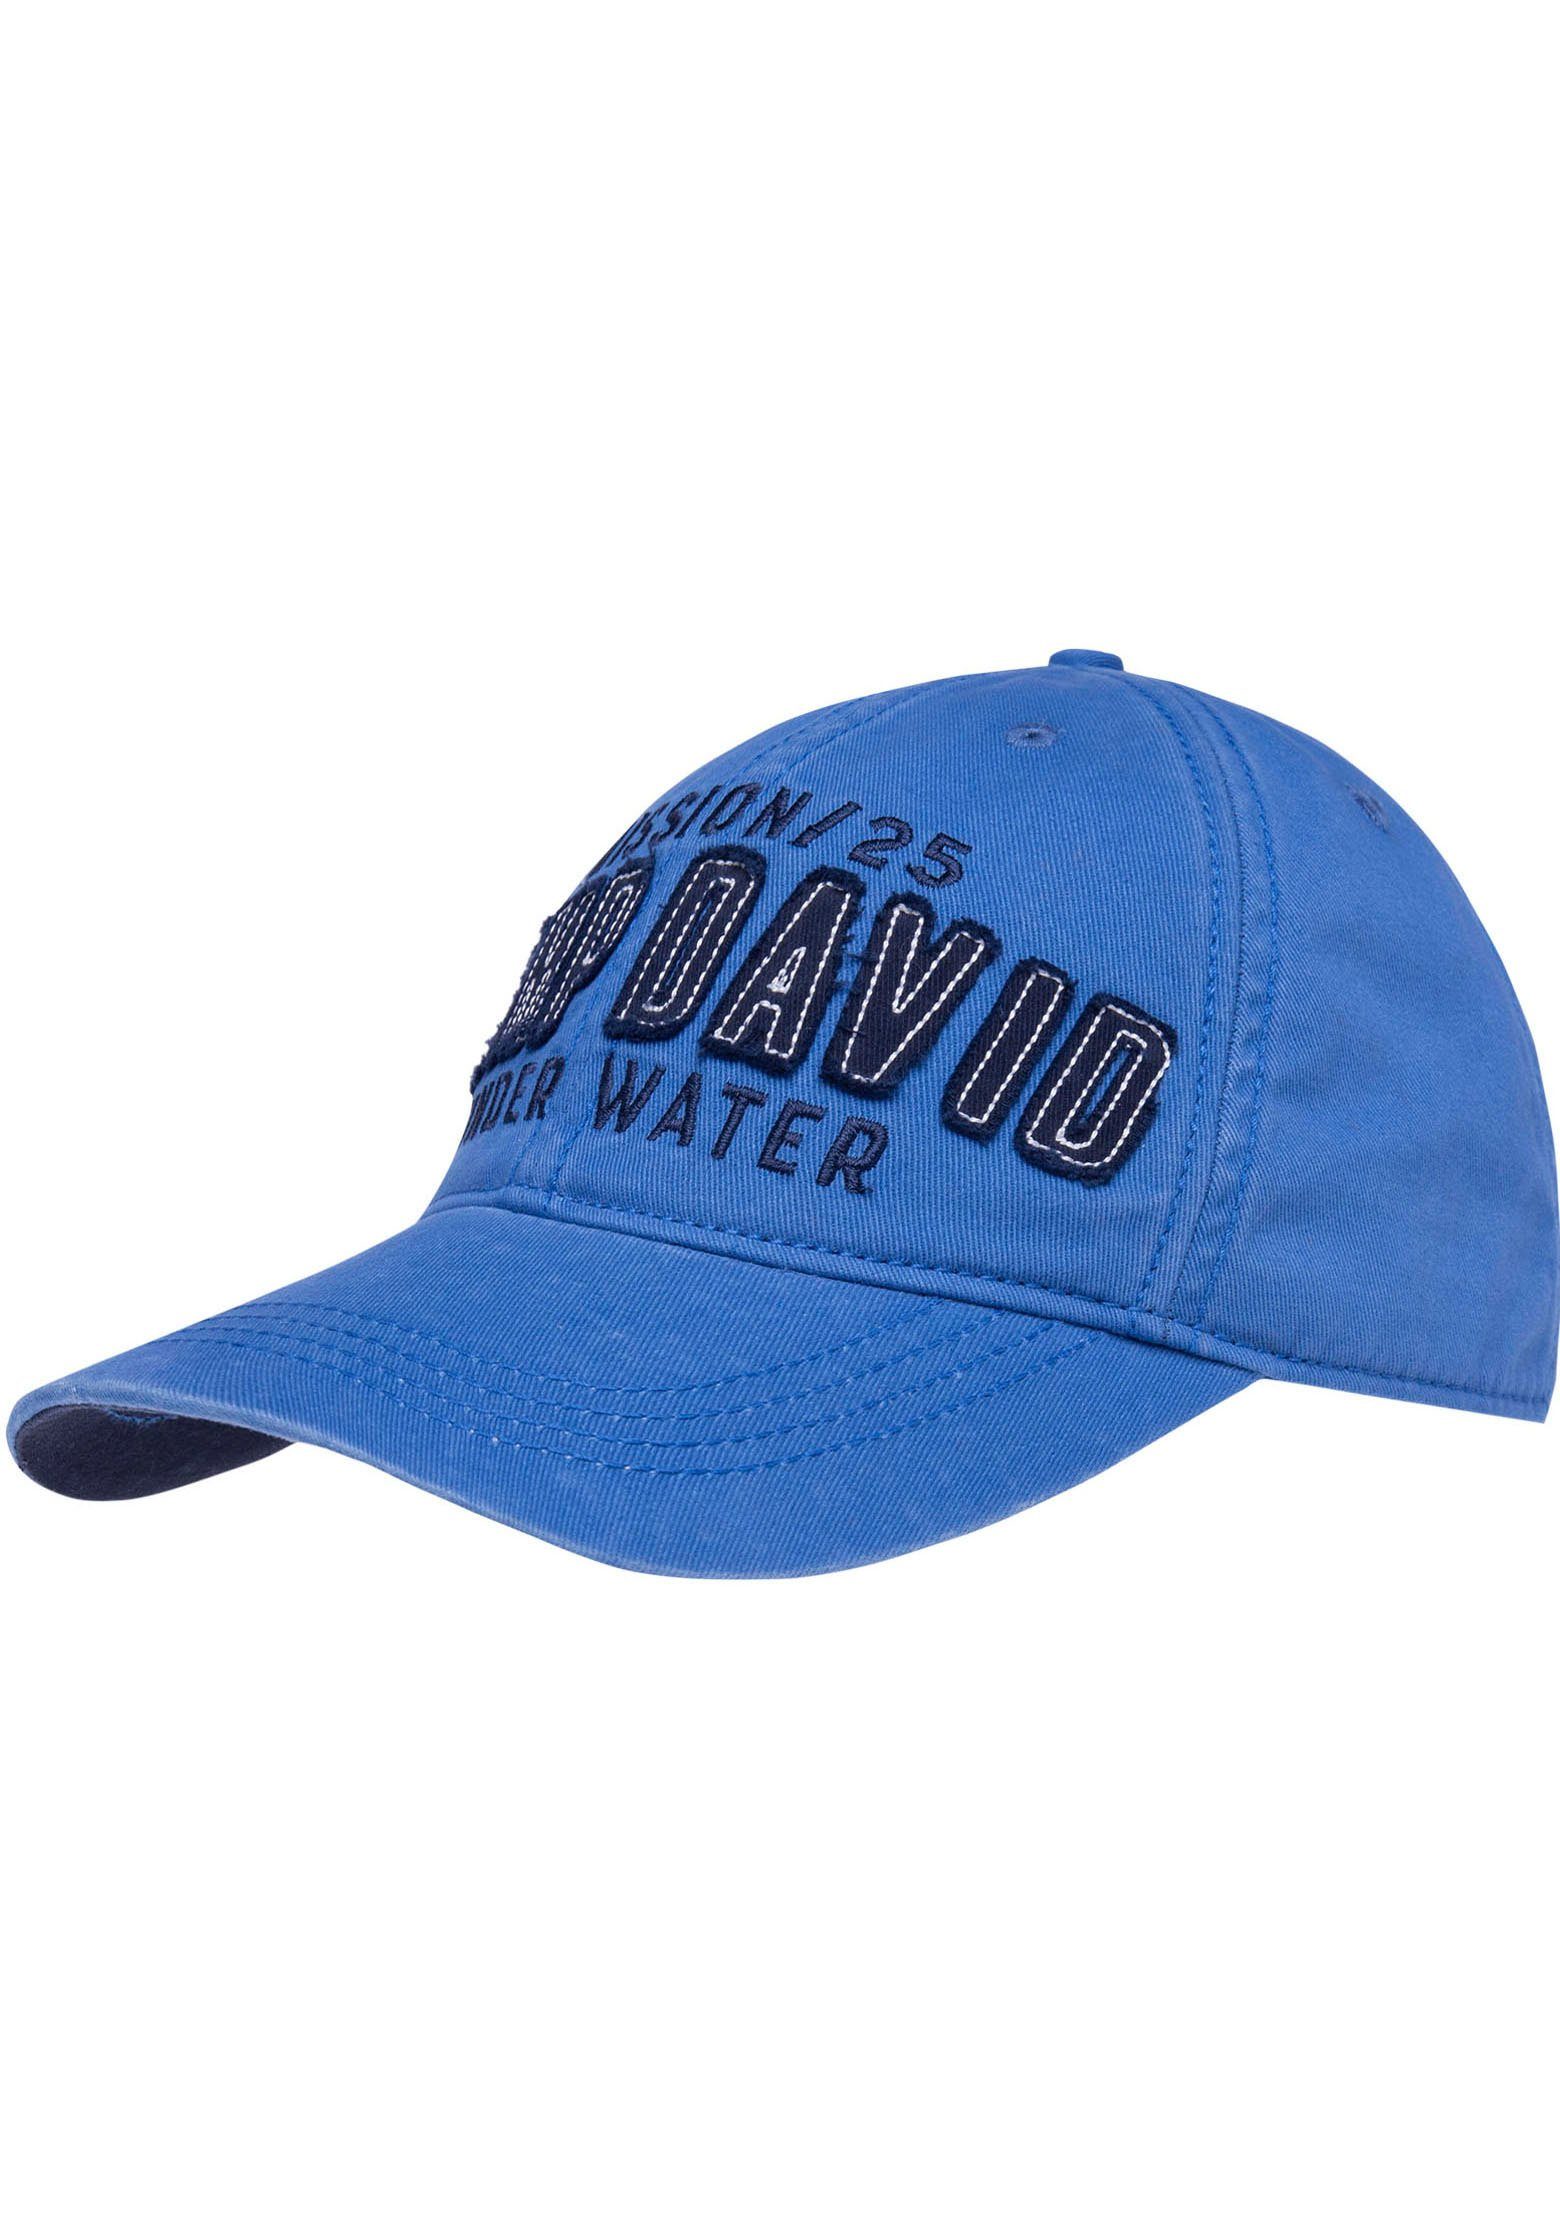 CAMP DAVID Baseball Optik pacific Cap mit gewaschener blue